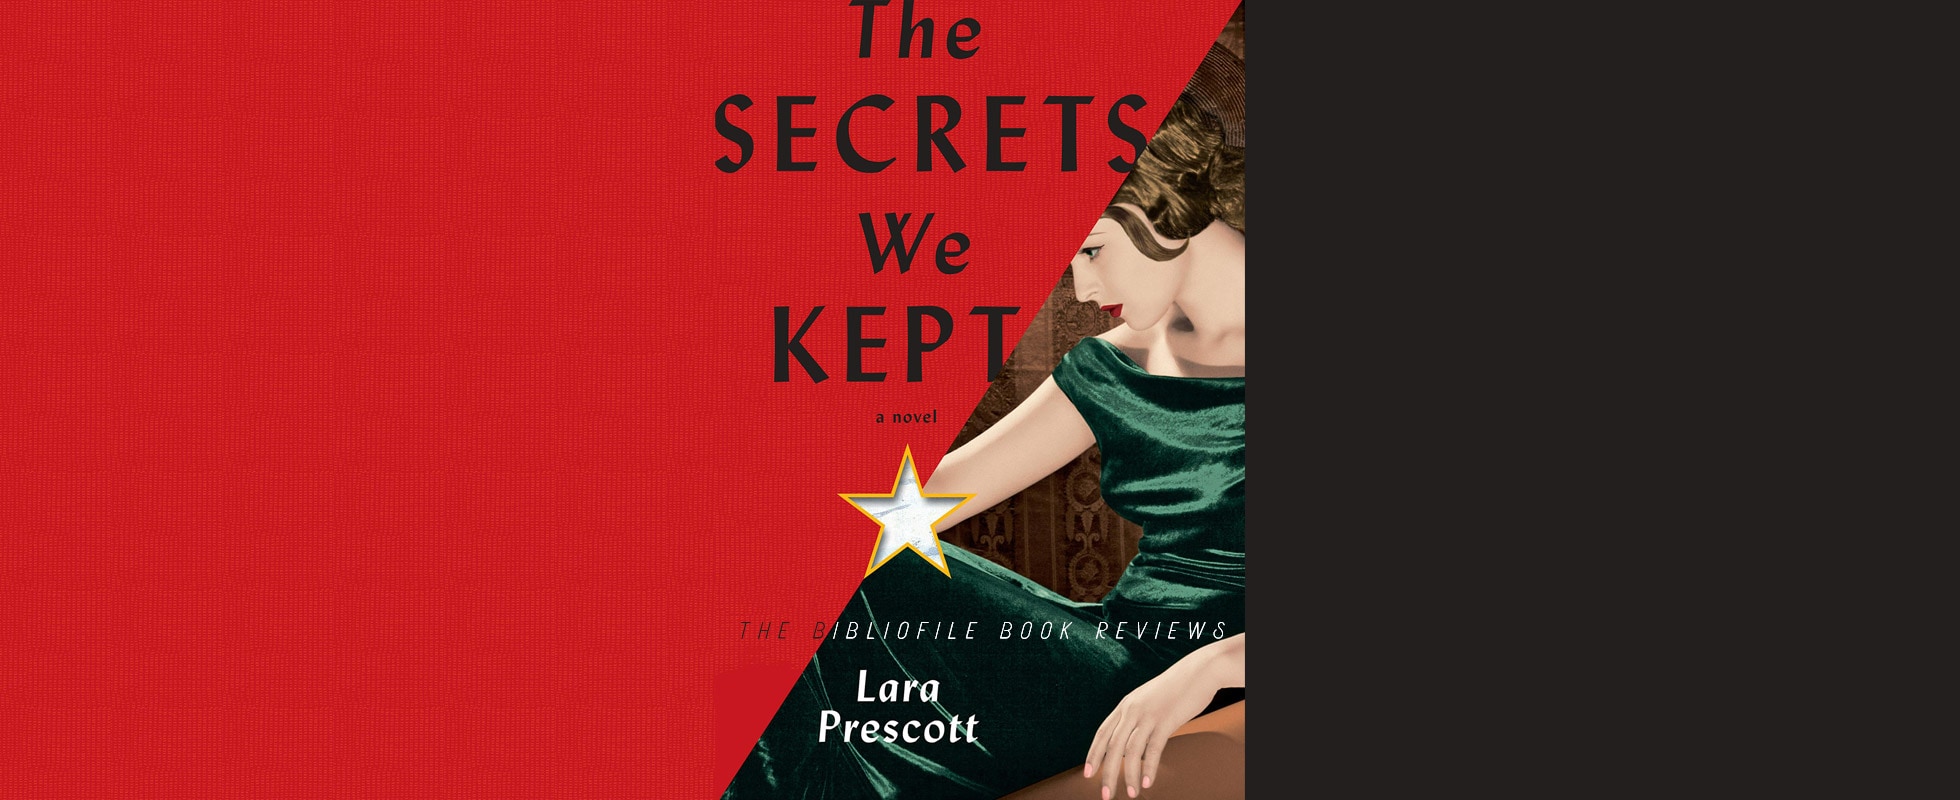 the secrets we kept lara prescott summary review synopsis book